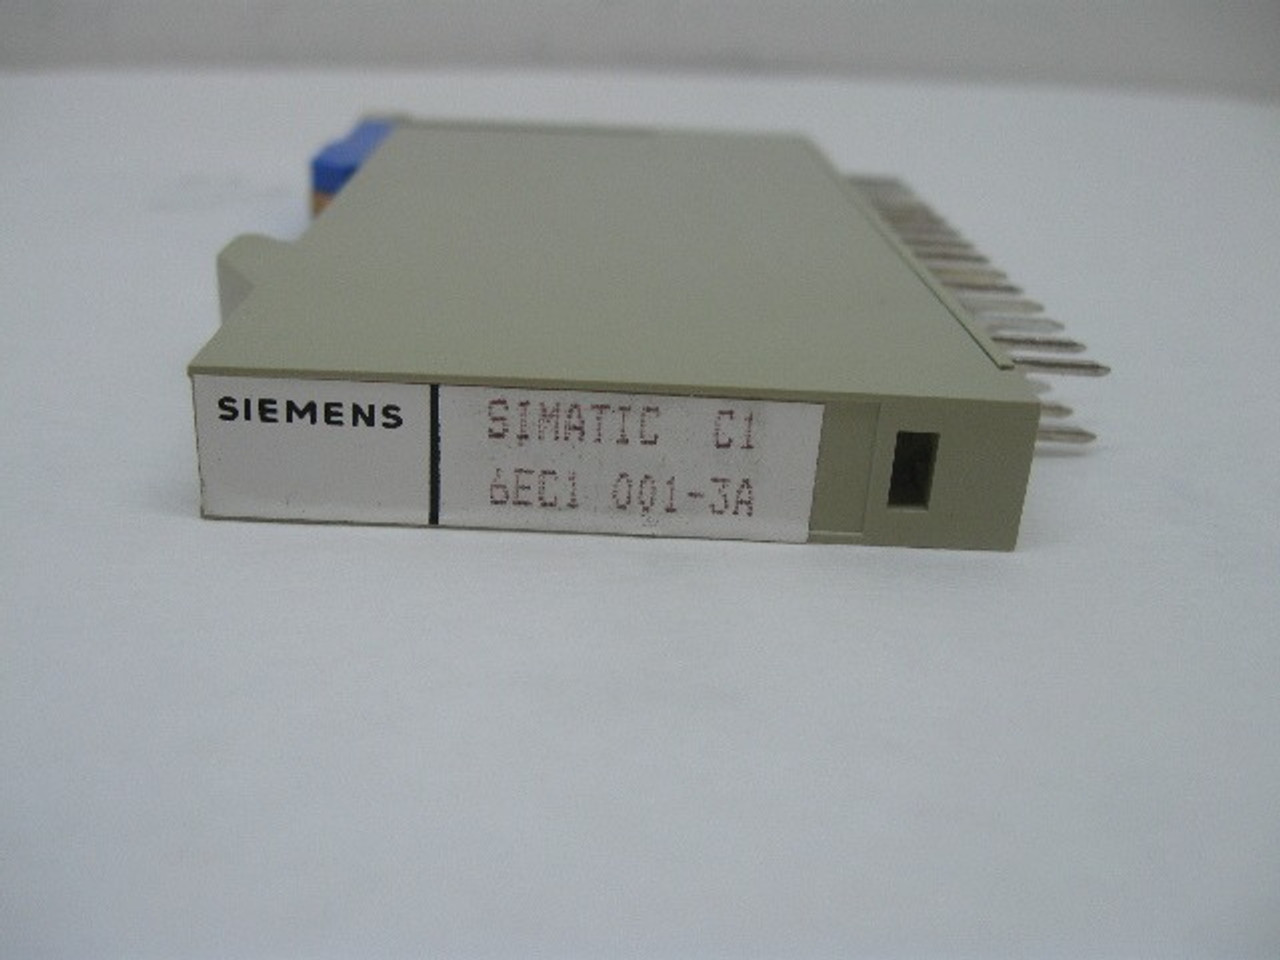 Siemens Simatic C1 6EC1 001-3A Potted Block NEW